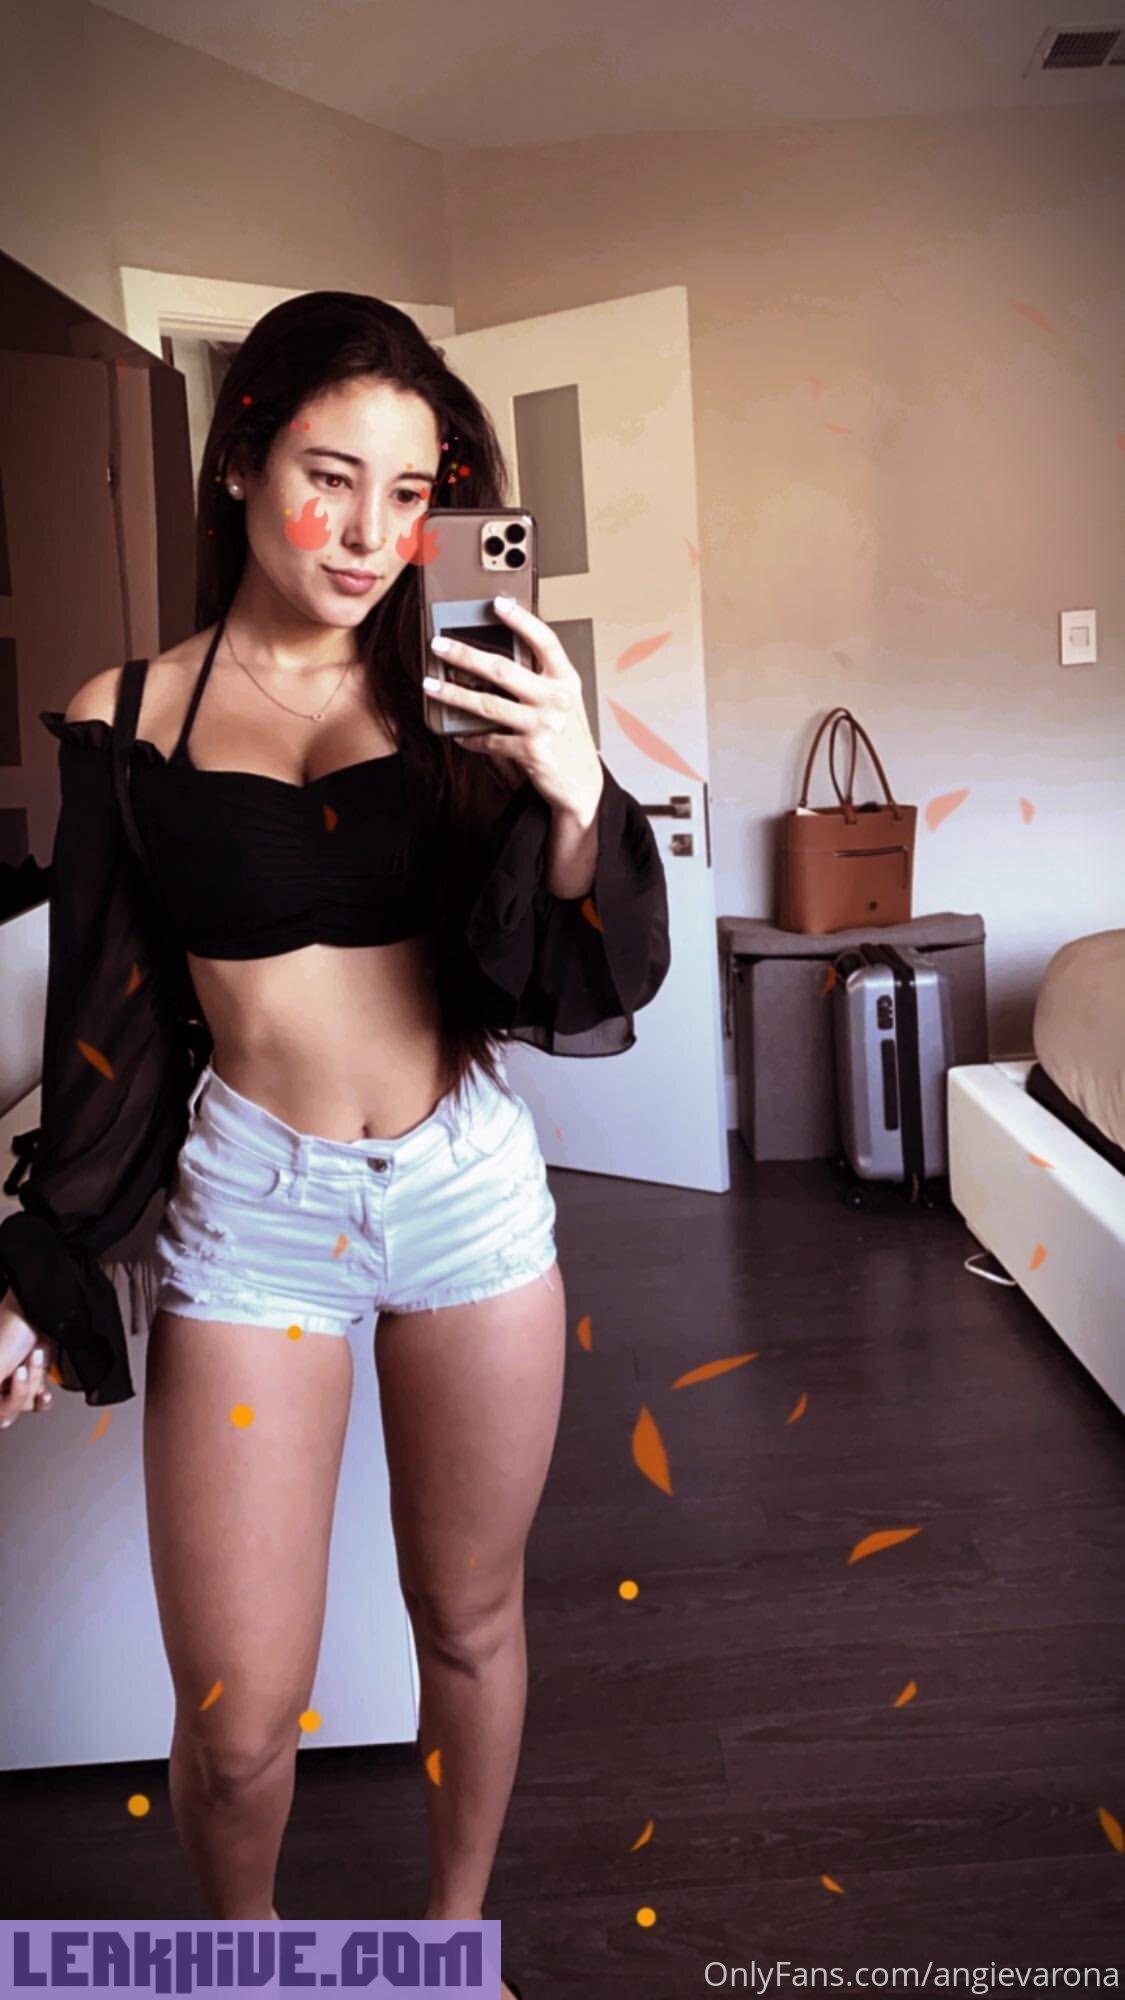 angie varona lingerie try on selfies set leaked KHOCGH